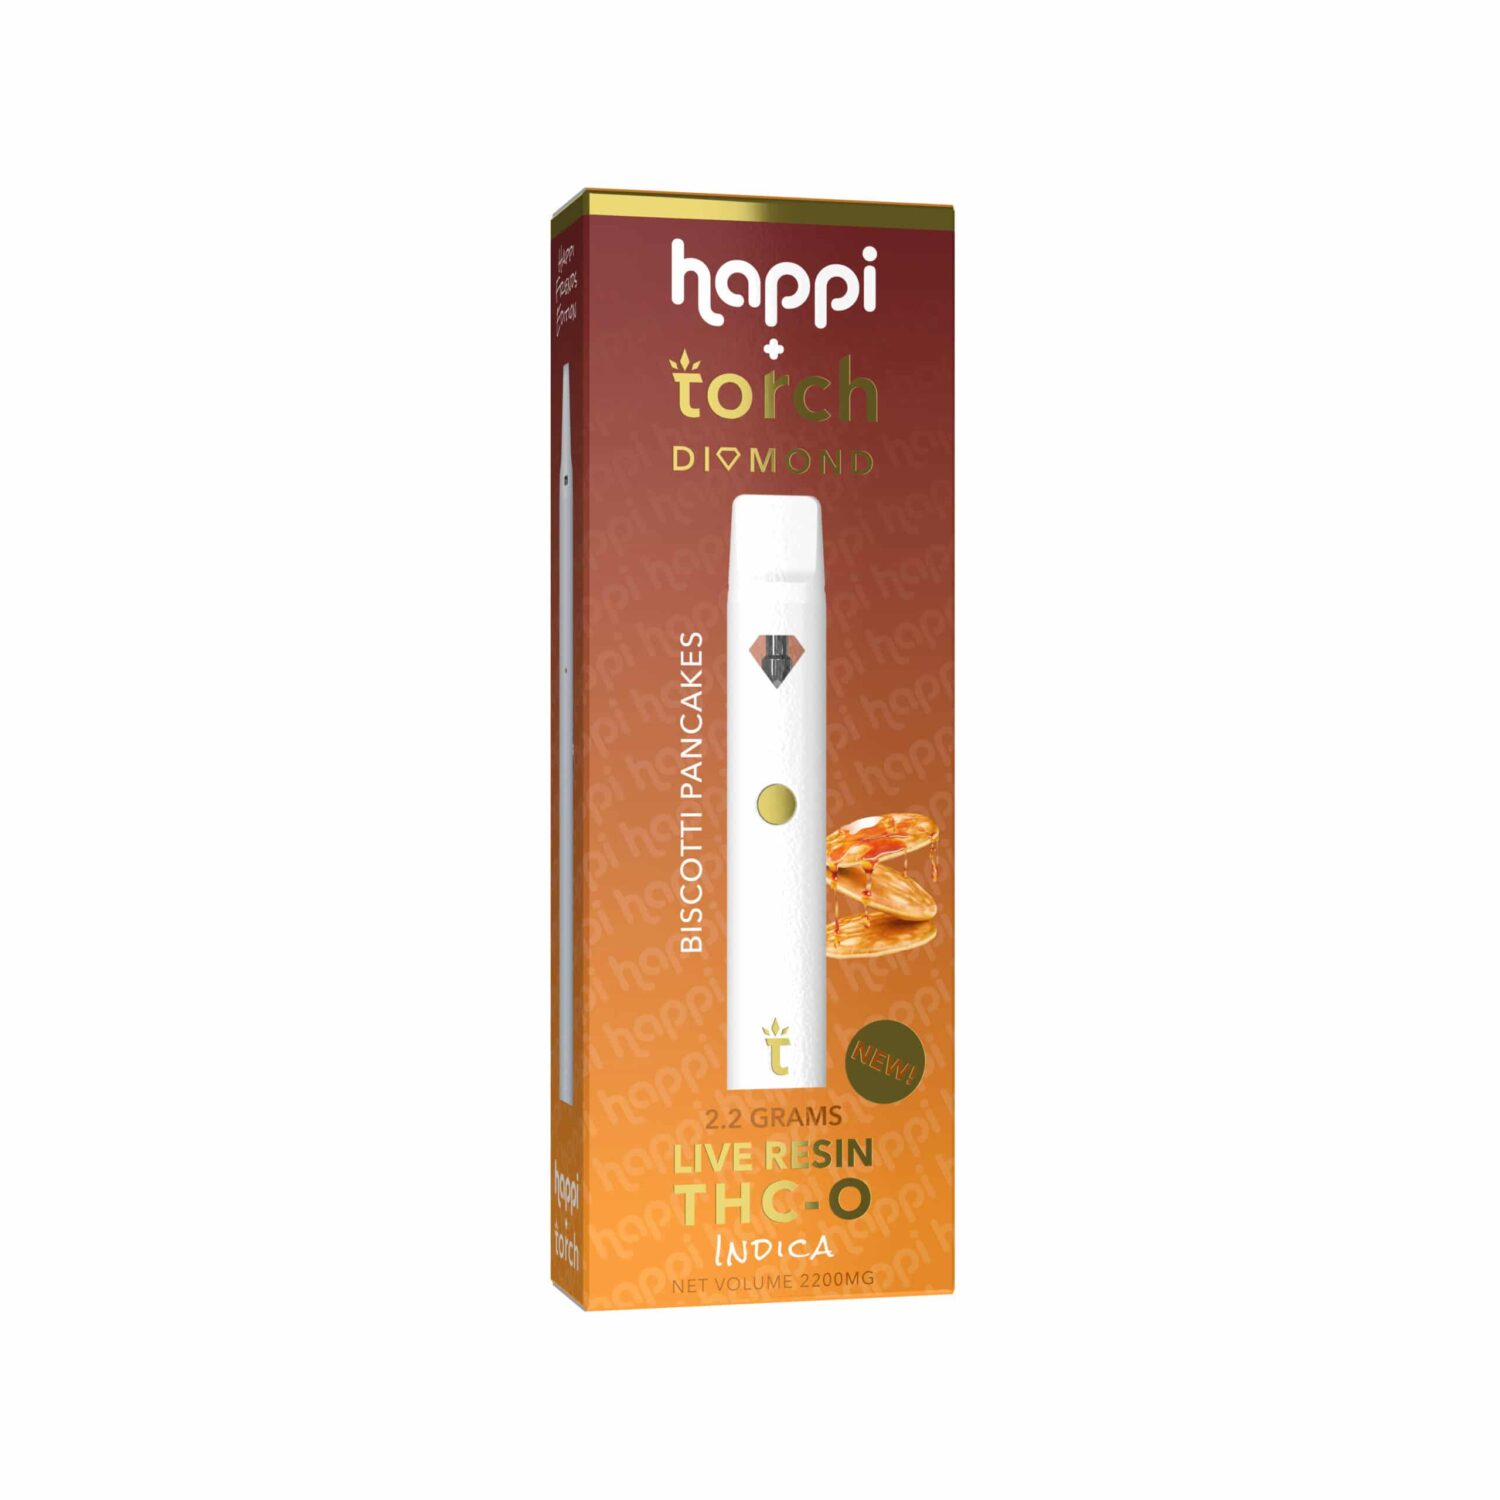 Torch x Happi Diamond THC-O + Delta 8 Disposables (2g) Best Price